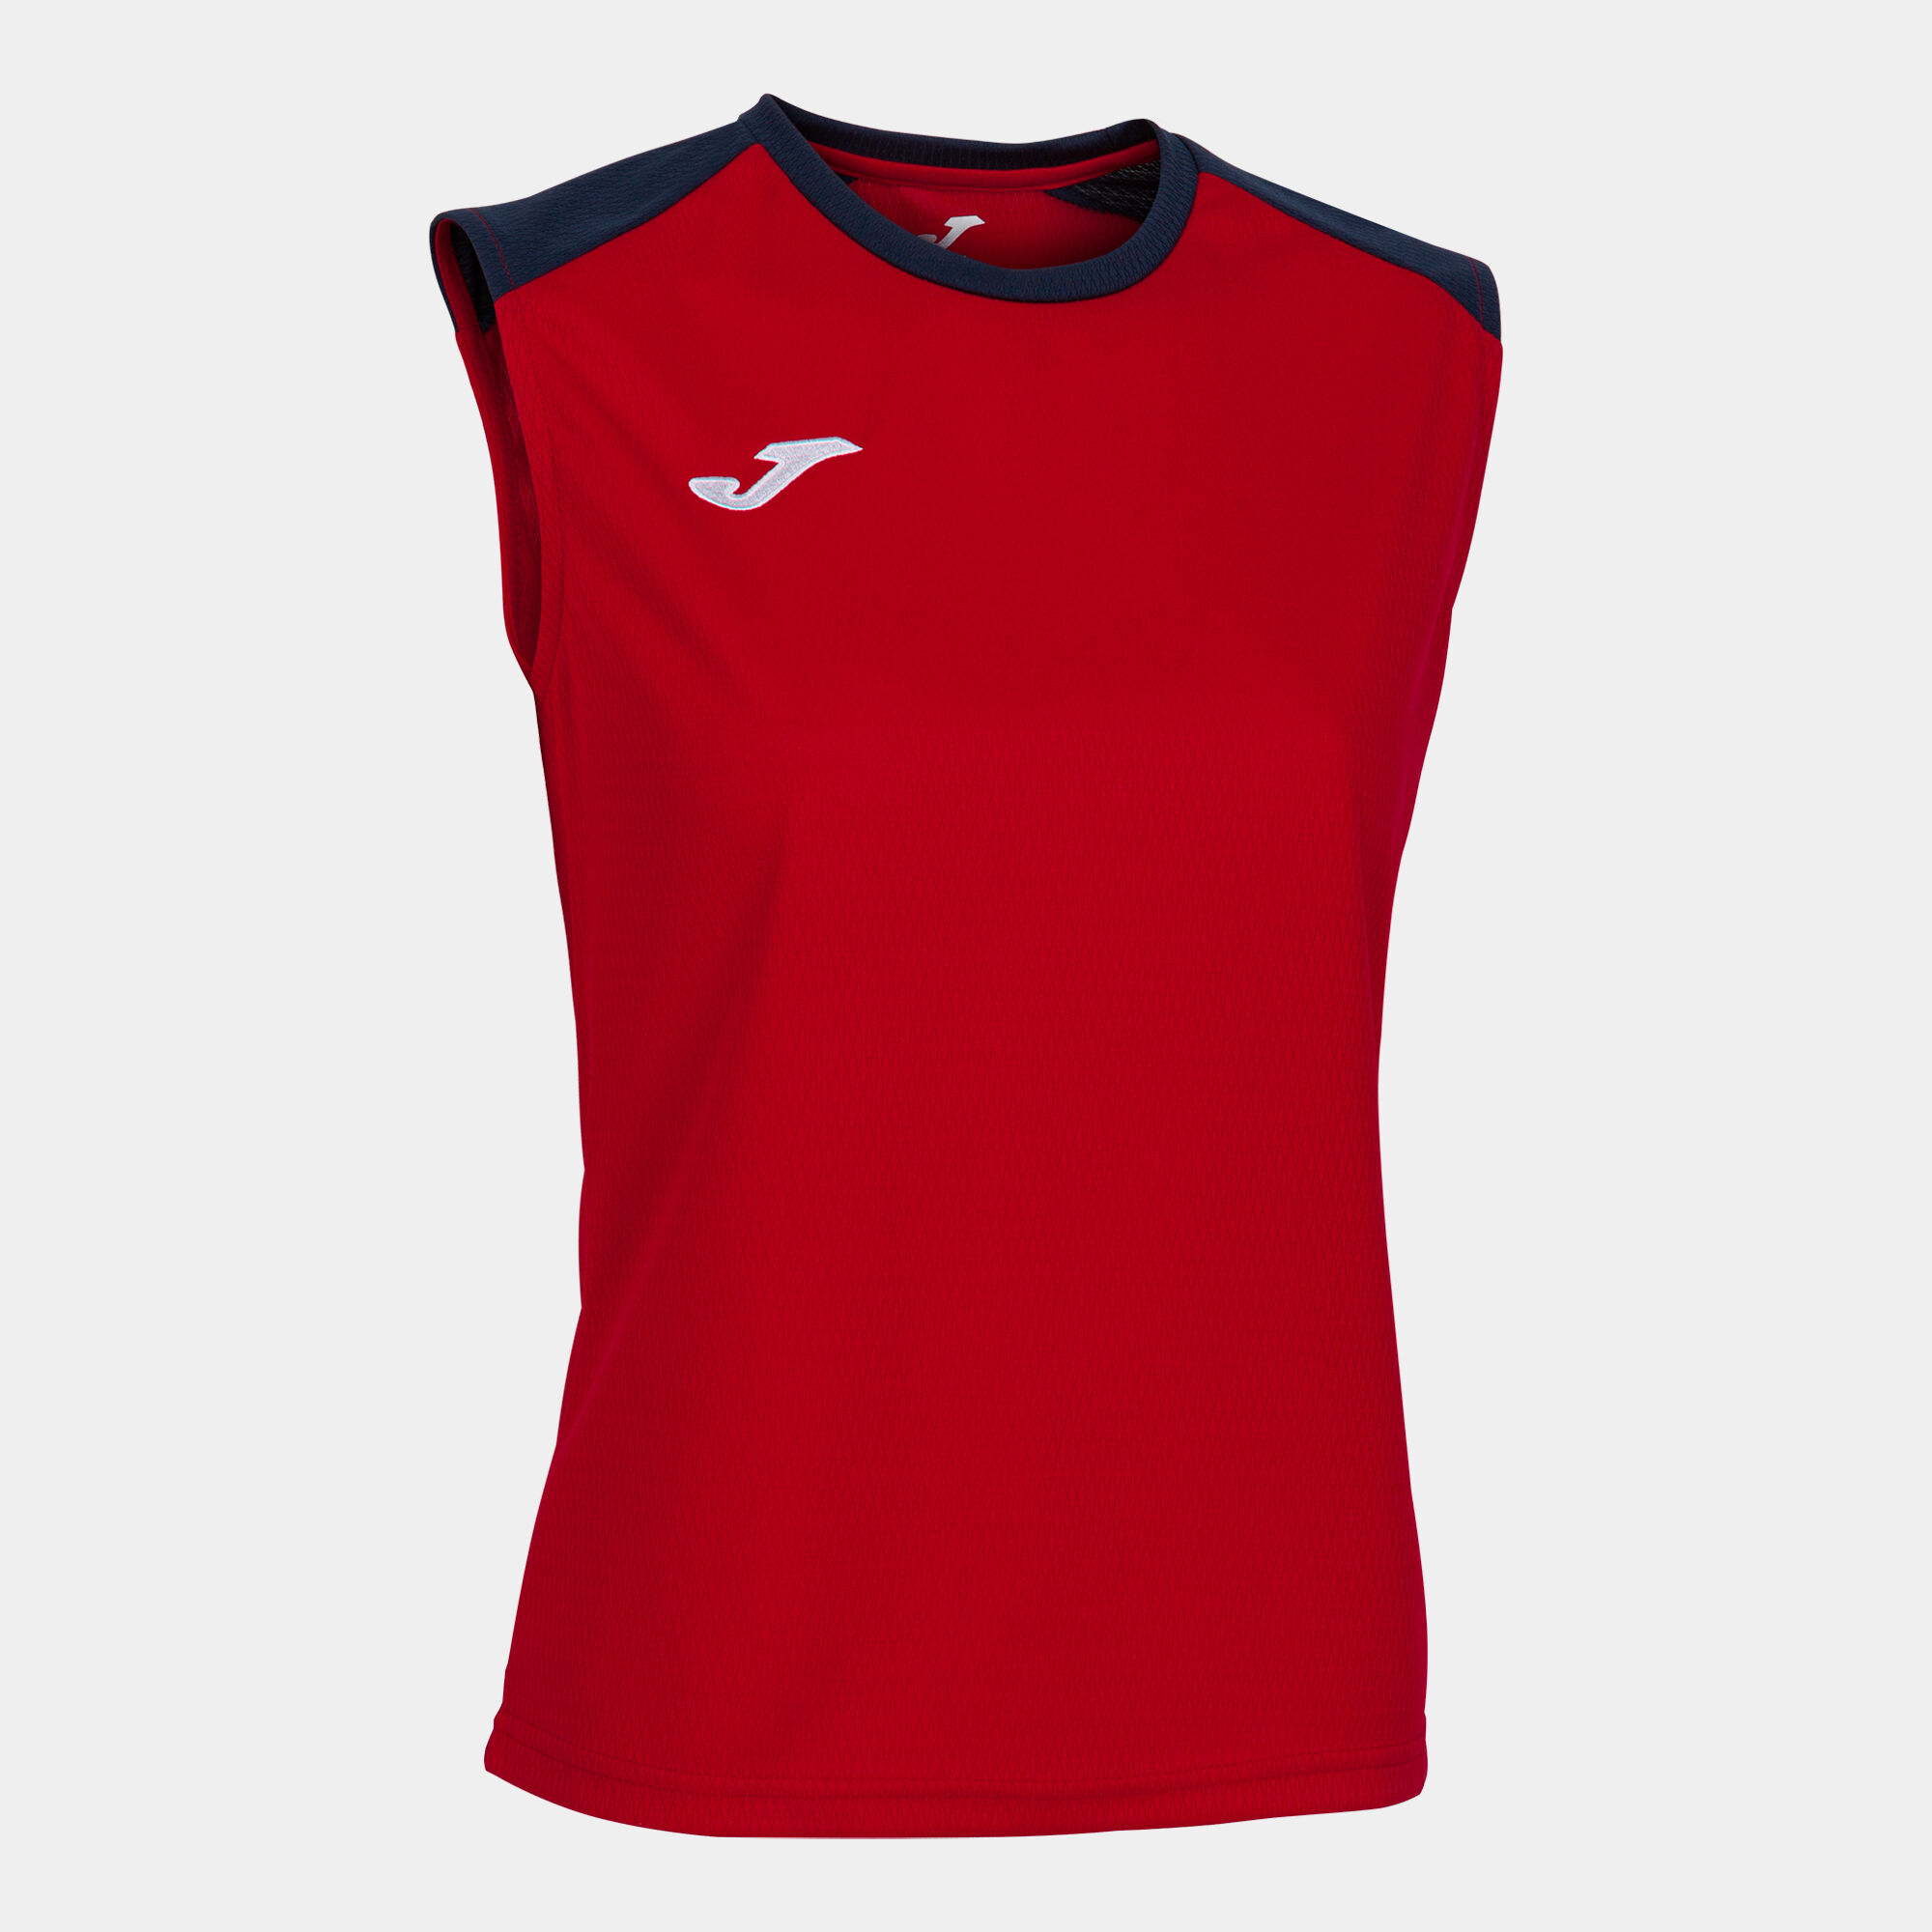 Camiseta tirantes mujer Eco Championship rojo marino